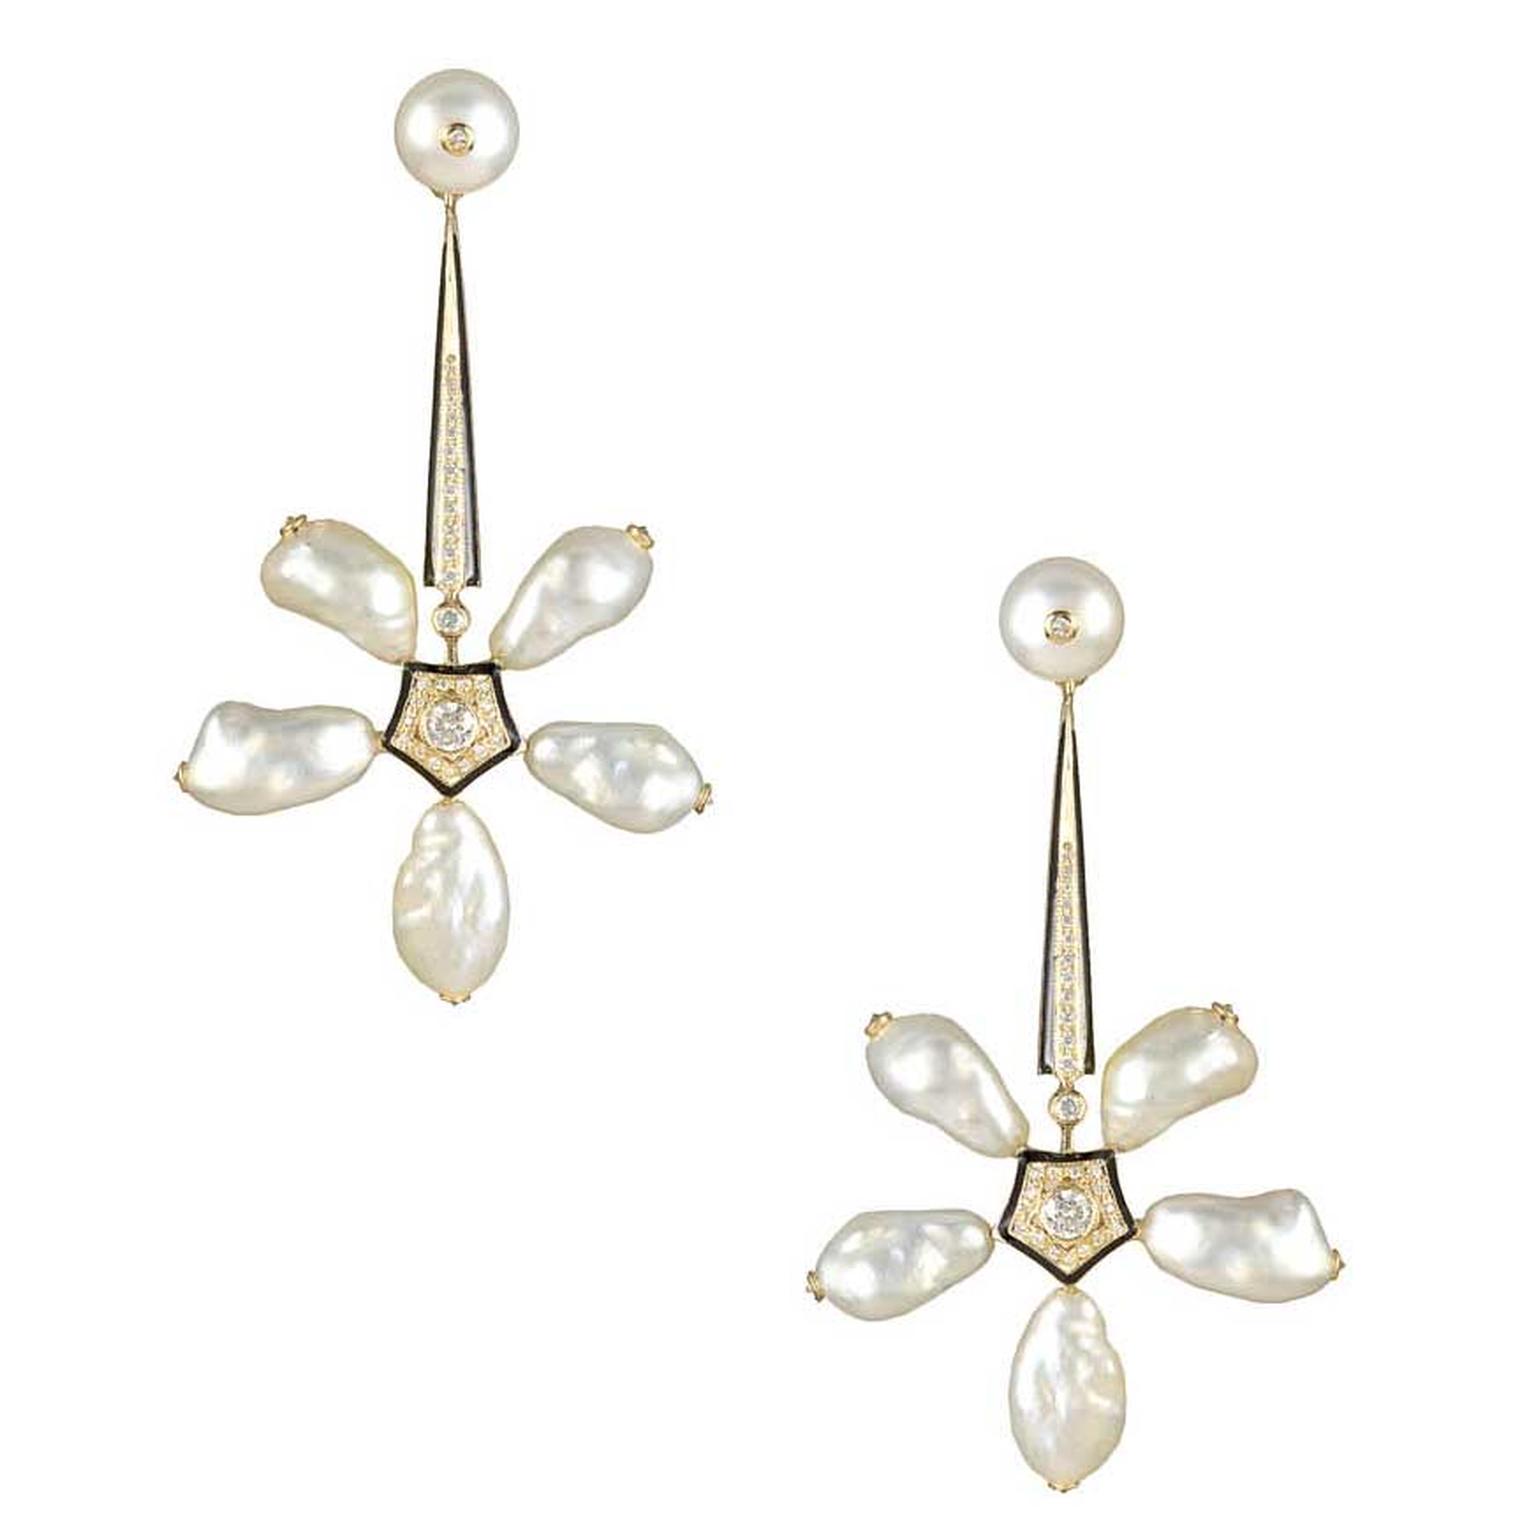 Hanut Singh Narcotic Jasmine natural pearl earrings